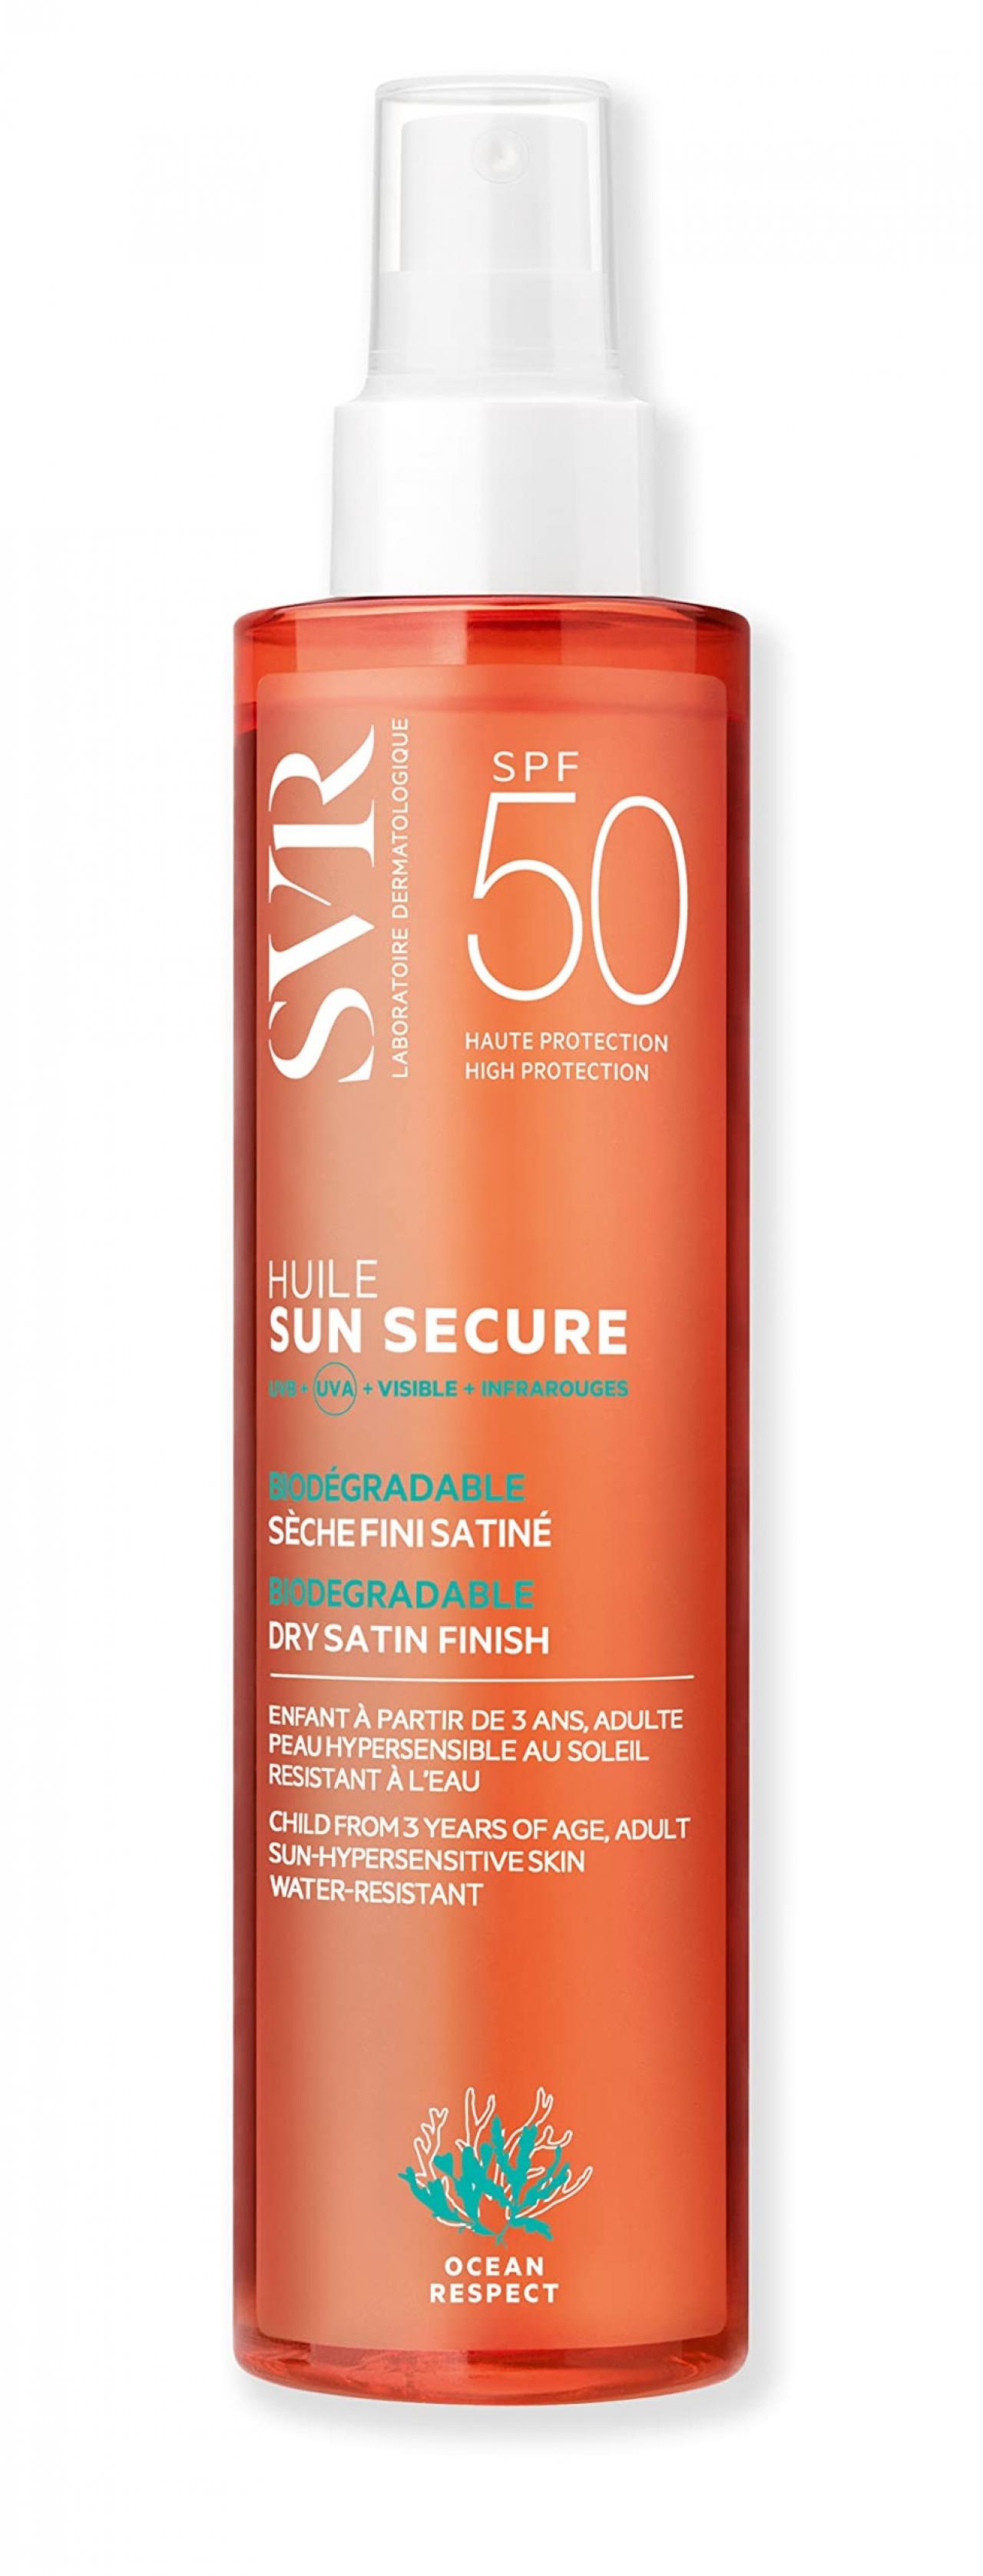 SVR Sun Protect Huile SPF50. 23 euros.